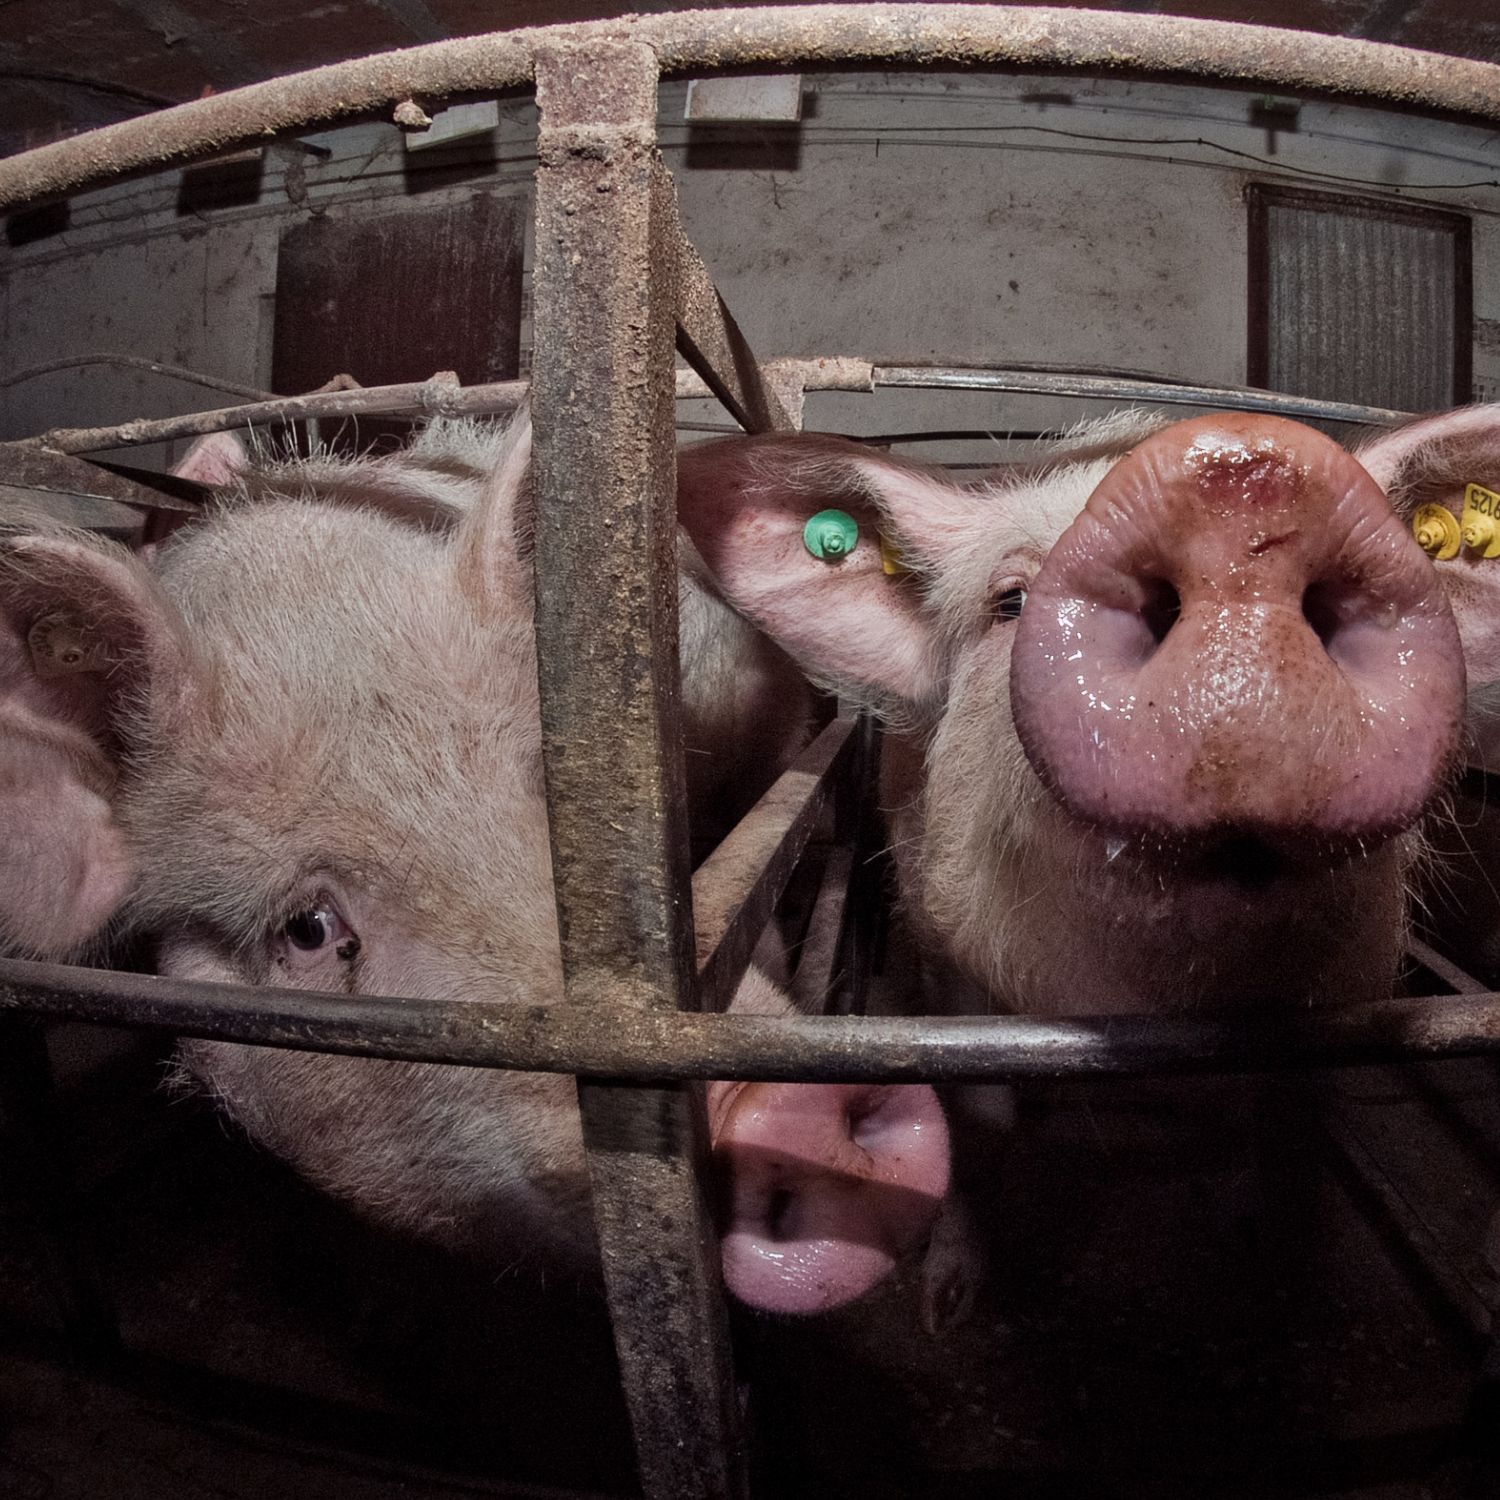 Cerdos enjaulados en granja intensiva en España